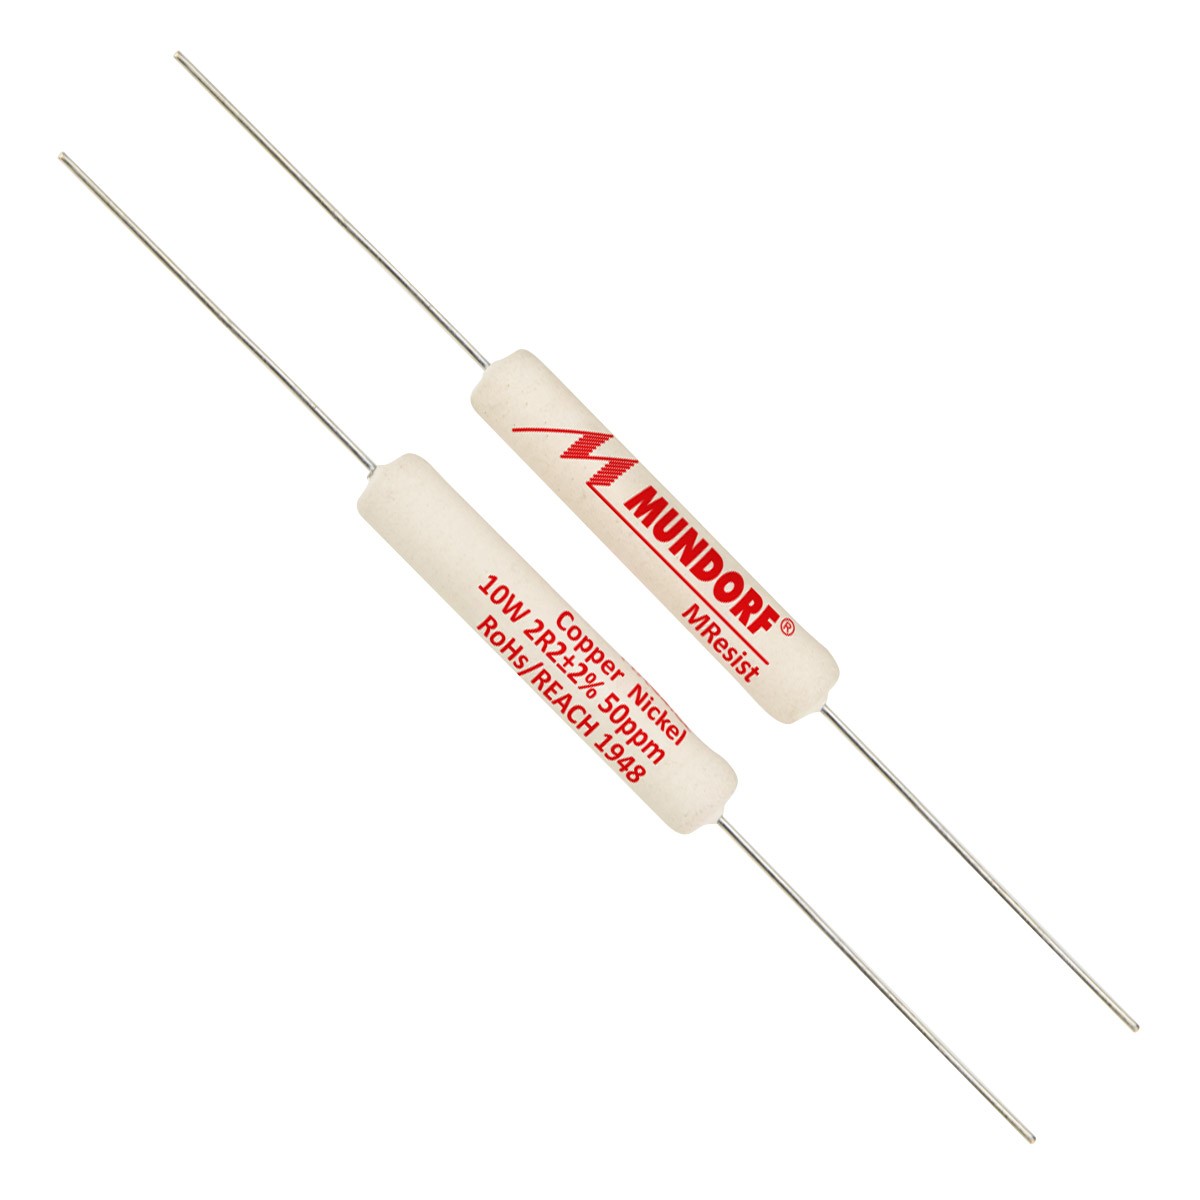 MUNDORF MRESIST CLASSIC Resistor 10W 1.8 Ohm